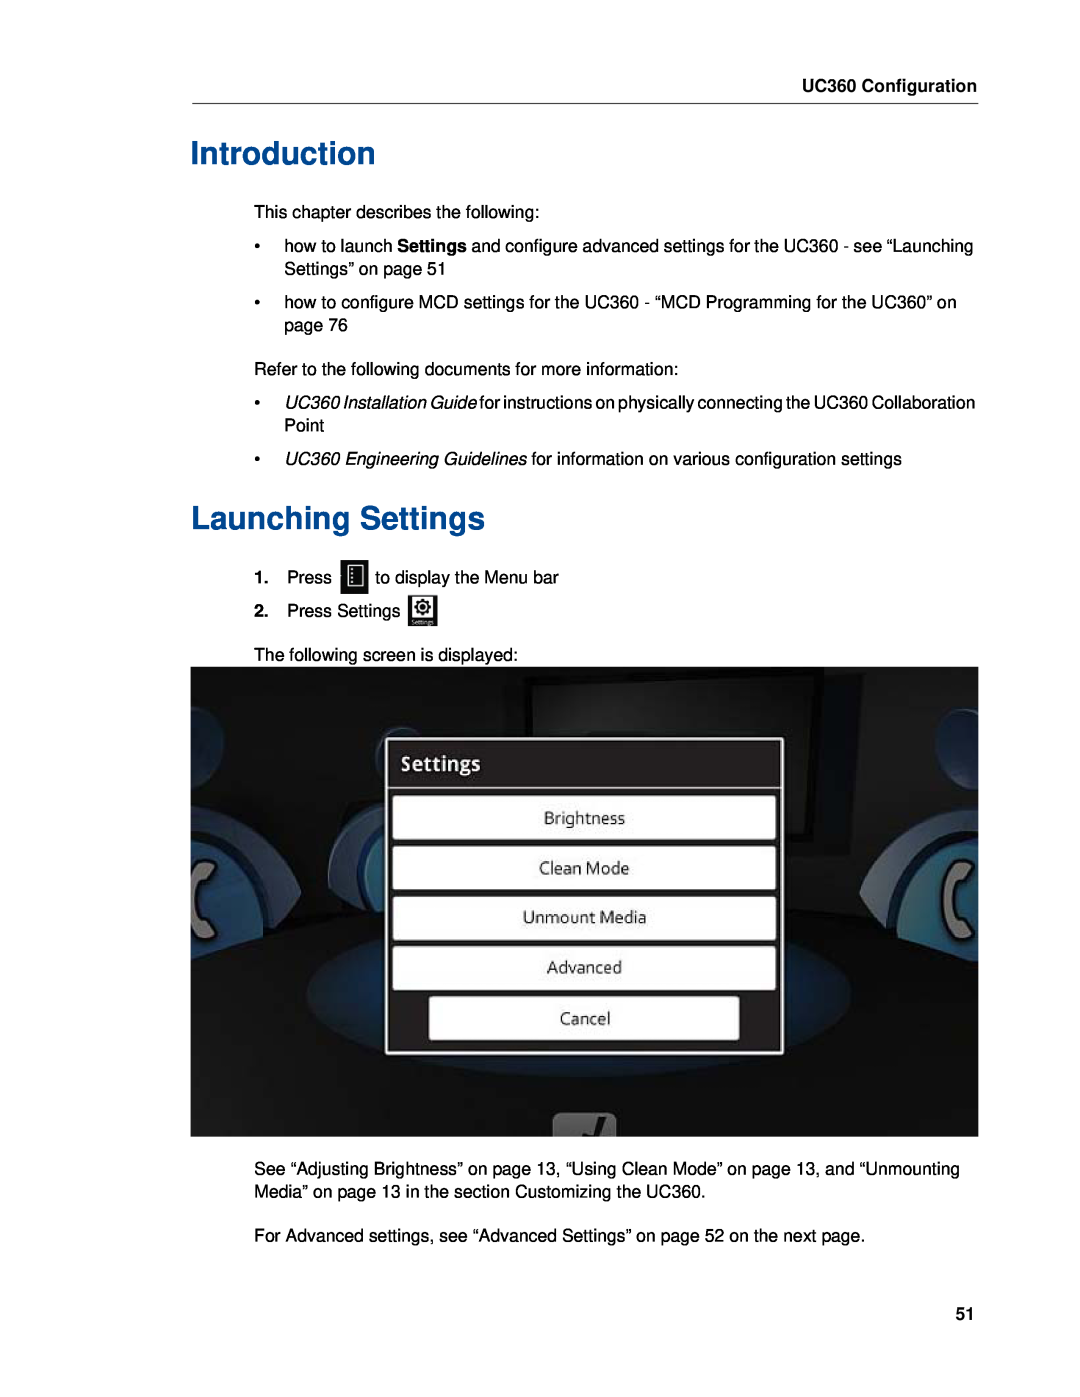 Mitel manual Launching Settings, UC360 Configuration, Introduction 